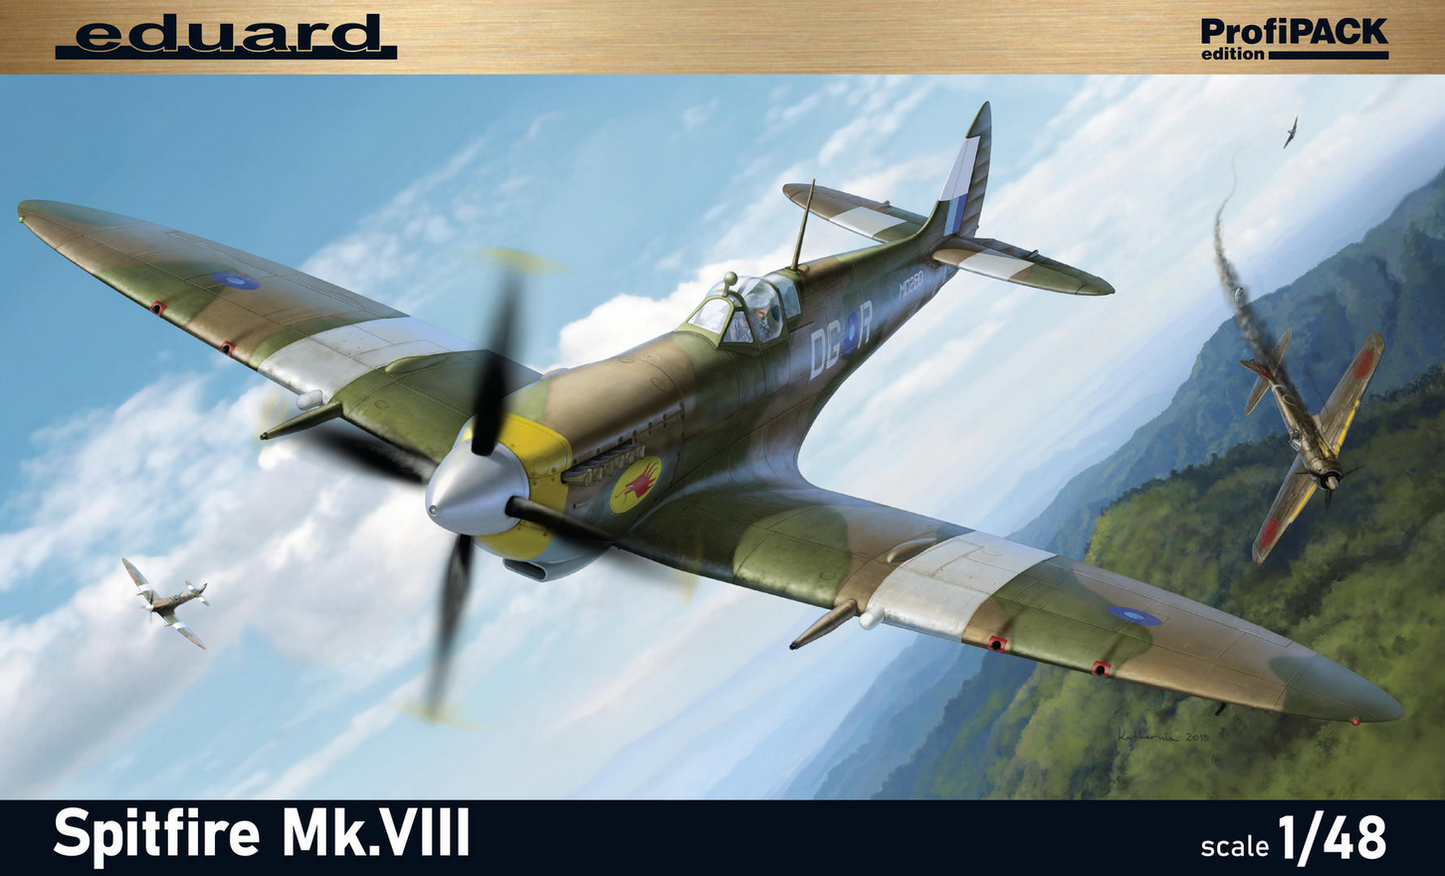 Spitfire Mk.VIII - Profipack - EDUARD 1/48